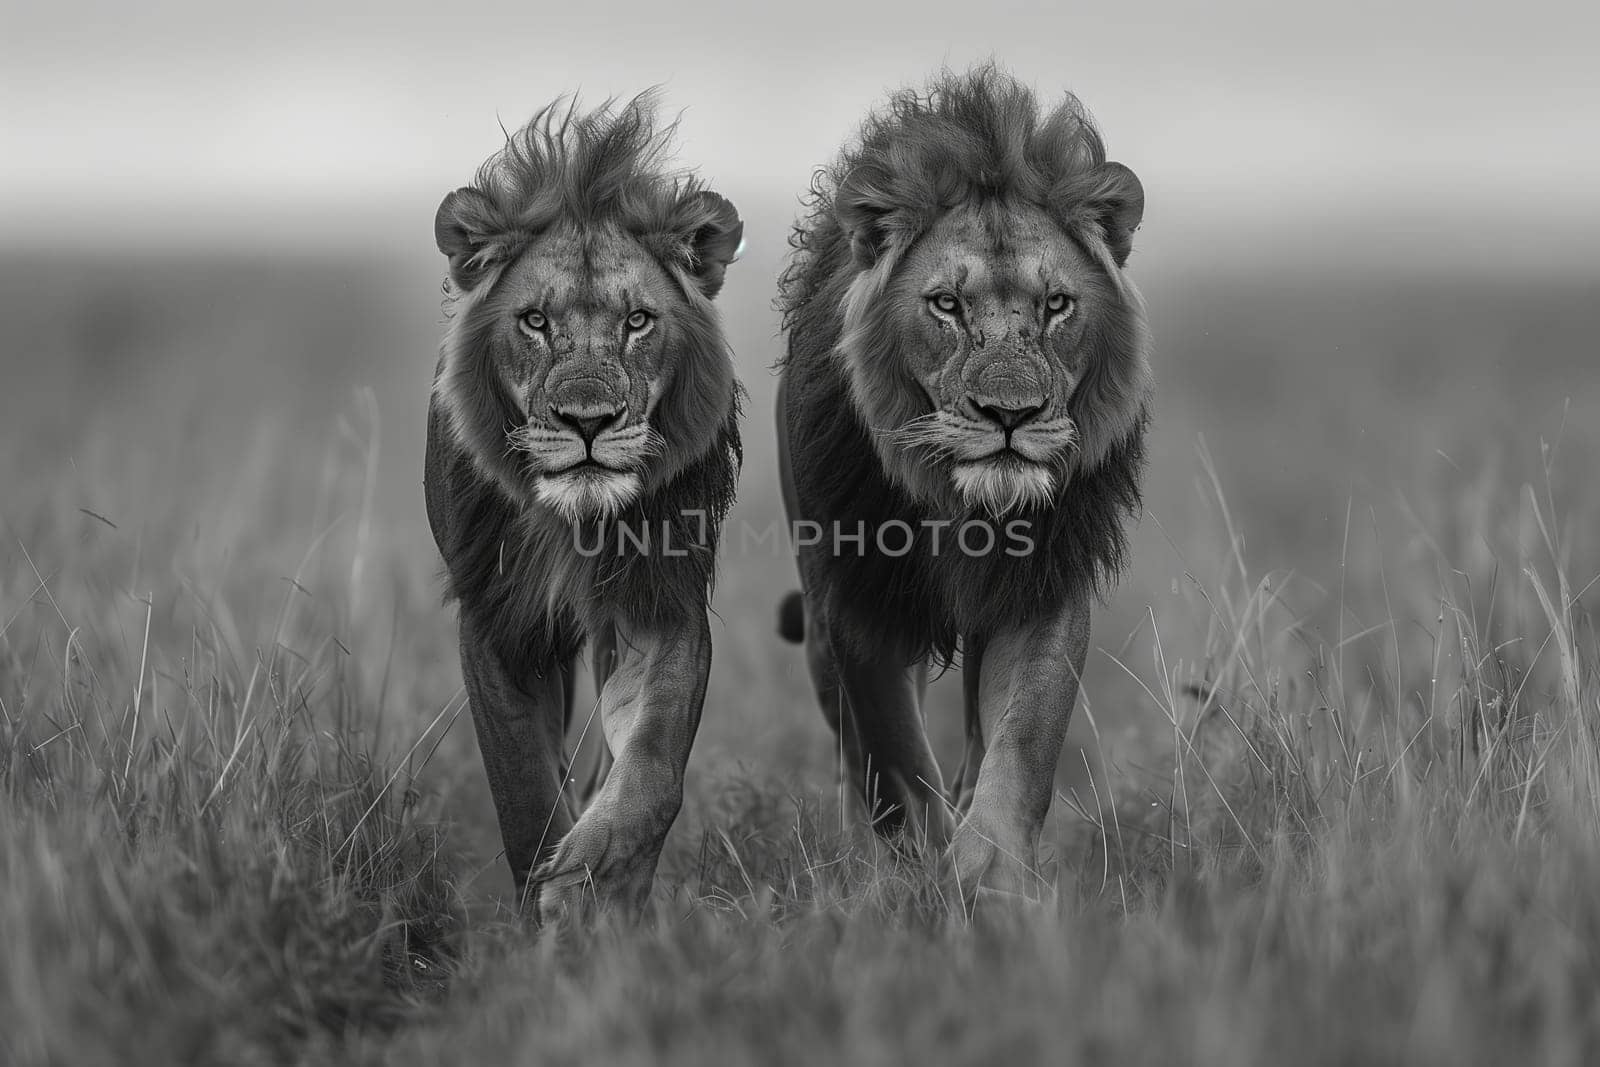 Two Masai lions roam grassy terrain in blackandwhite photo by richwolf